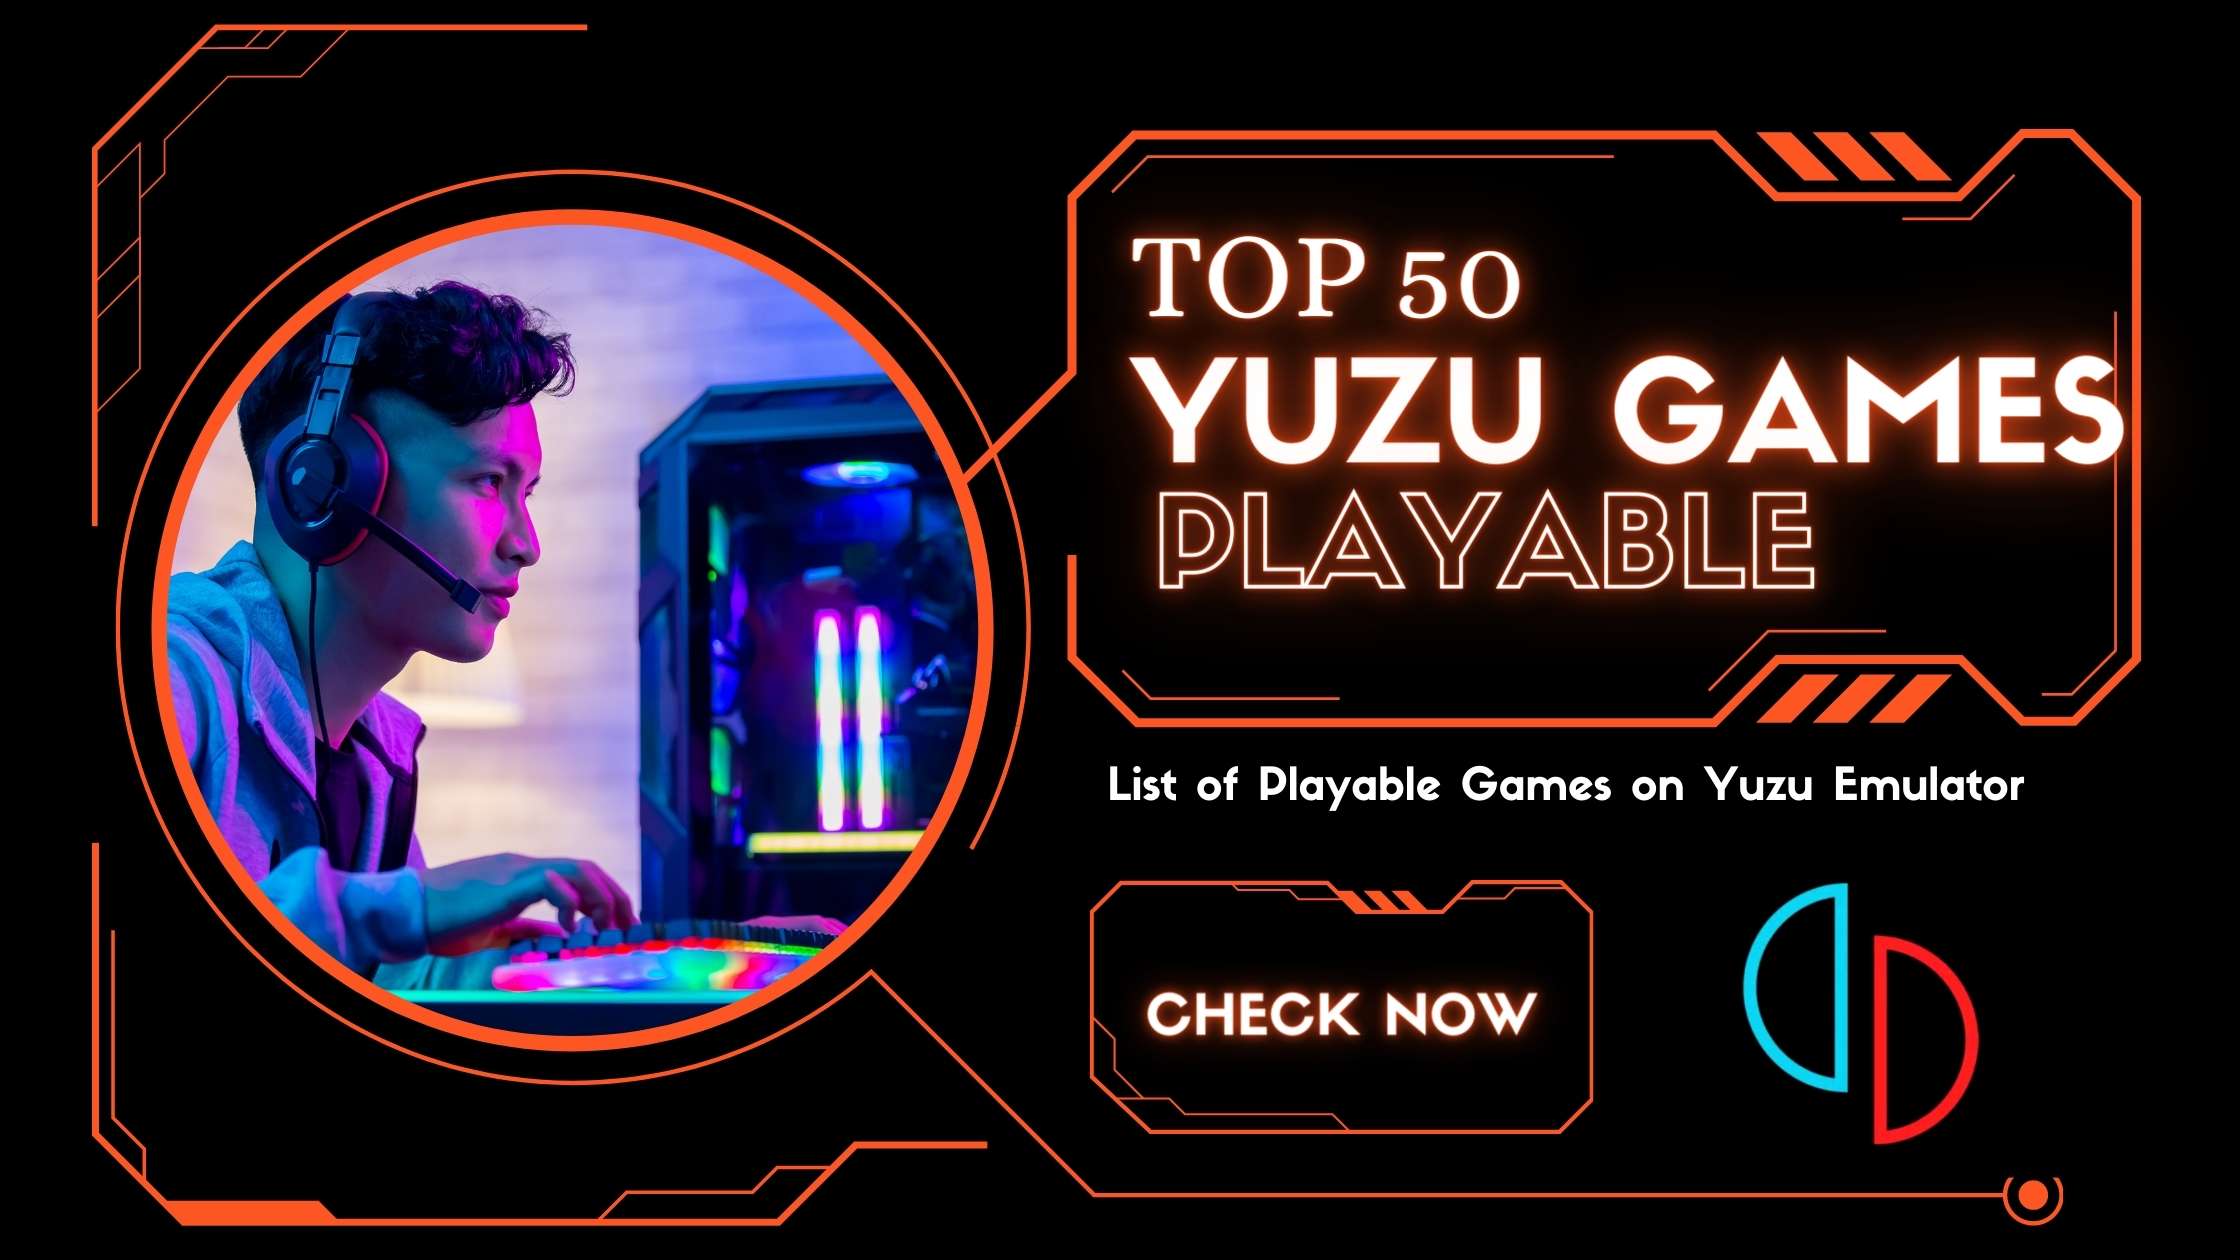 Yuzu Alternatives: Top 3 Game Emulators & Similar Apps